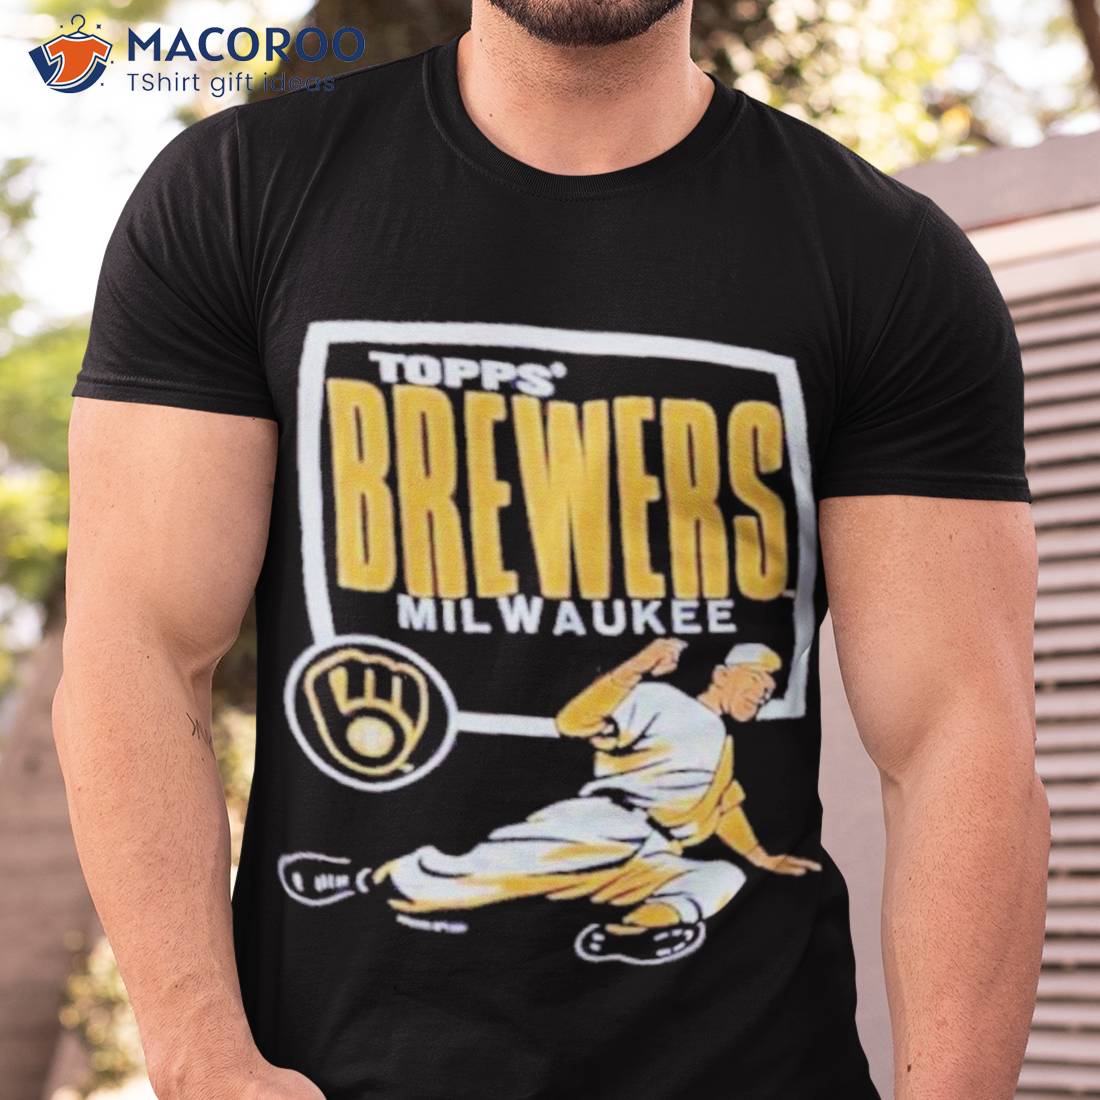 milwaukee brewers brew crew t shirt